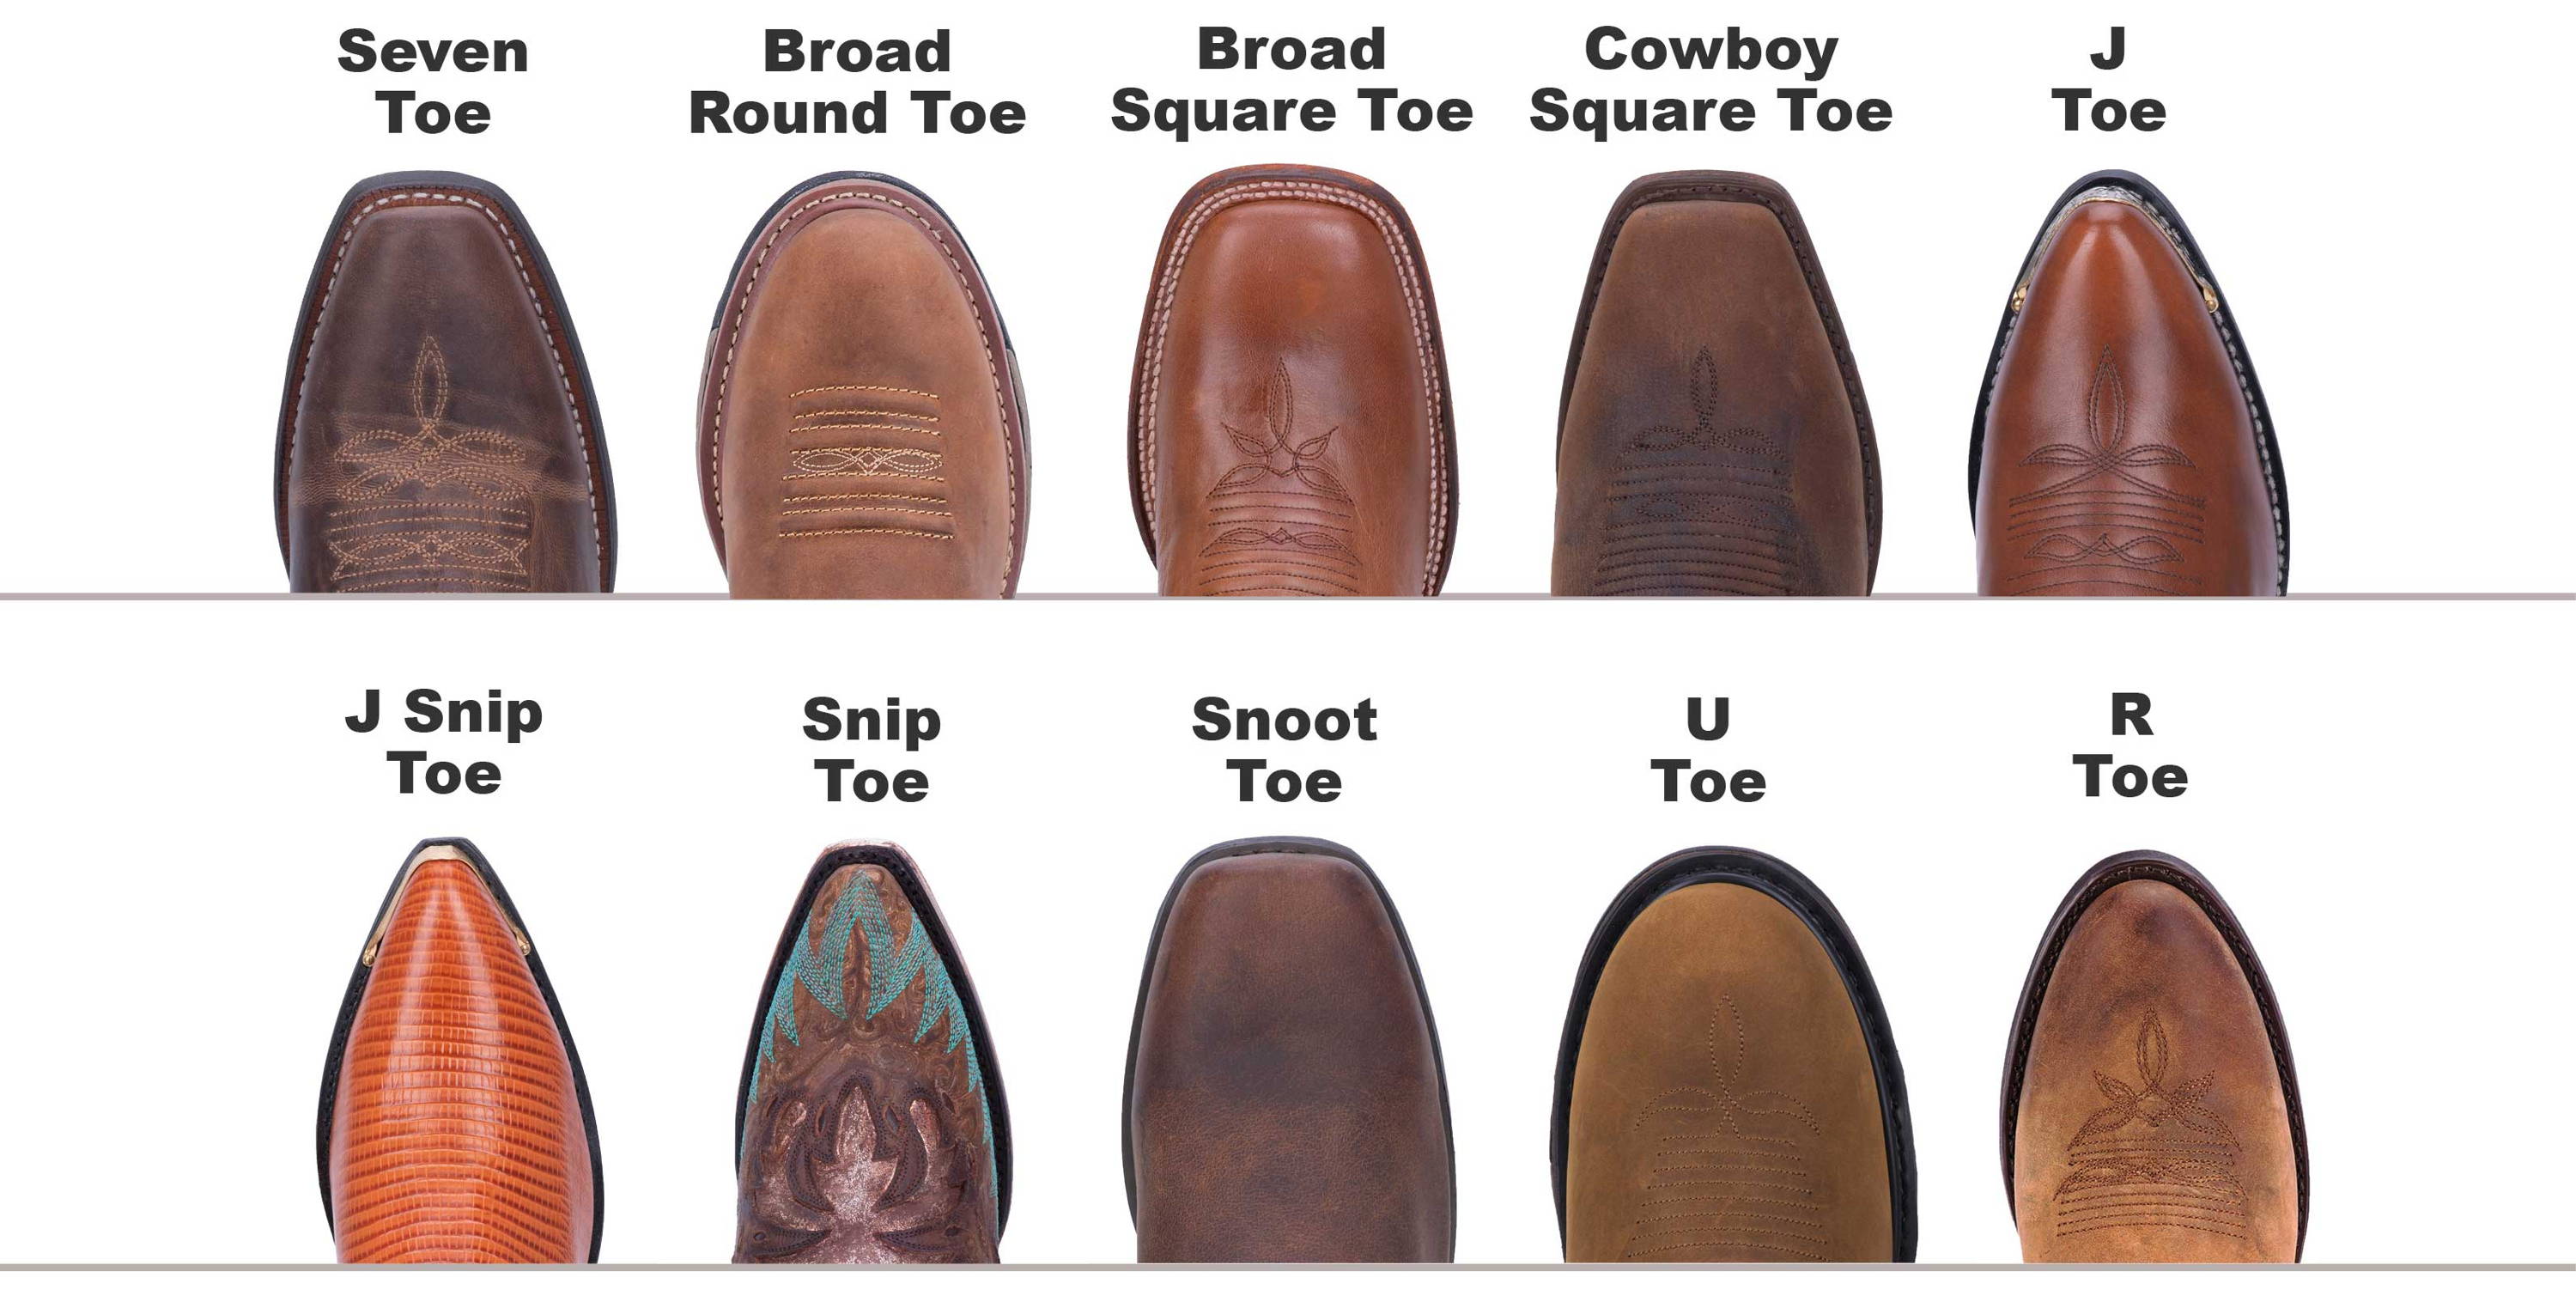 Western Boot Toe Nail Art - wide 9